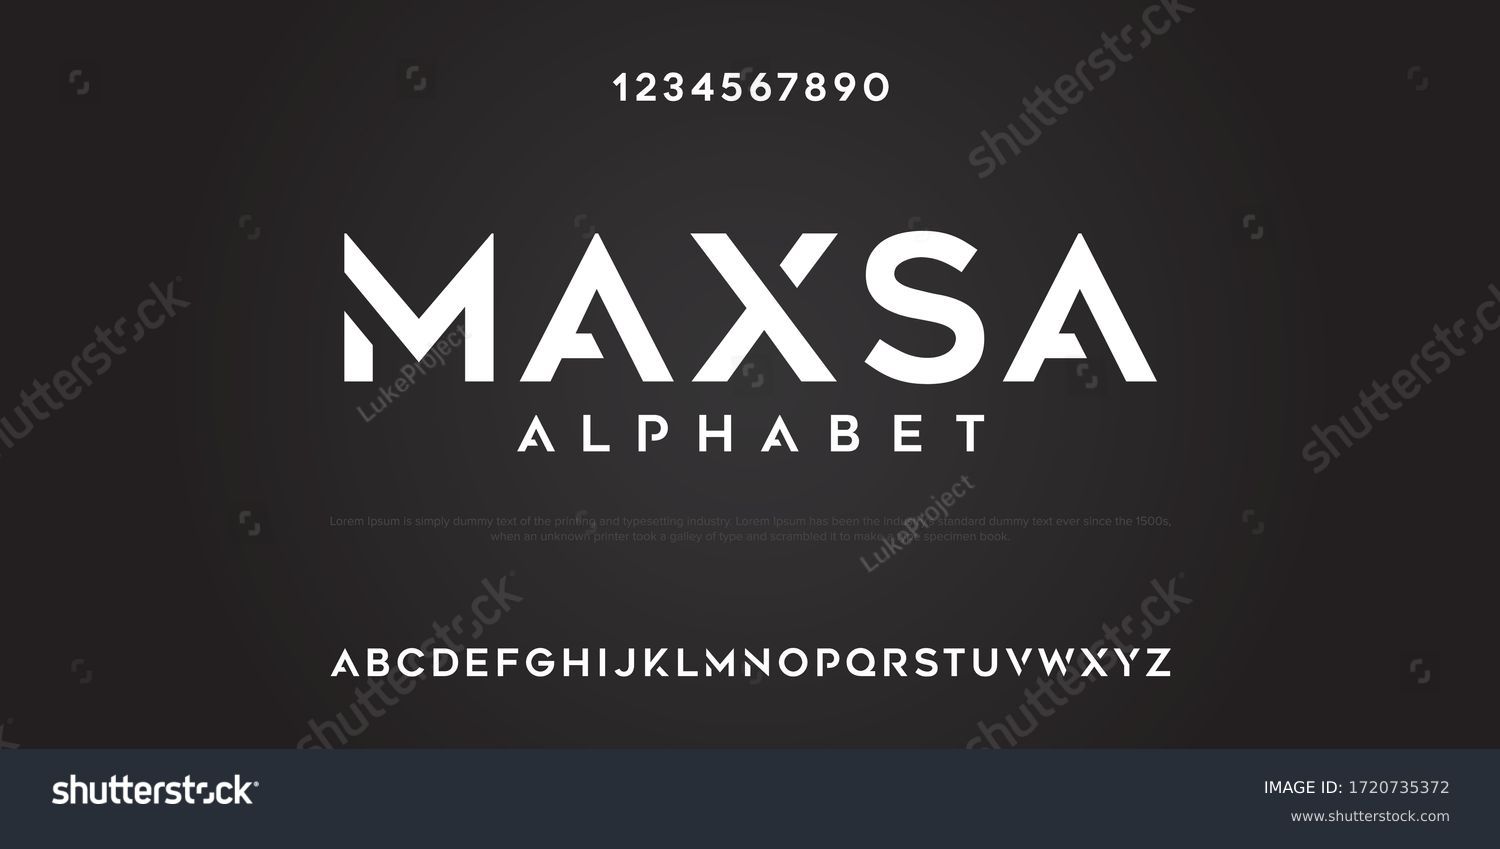 Maxsa alphabet custom text strong and funky #1720735372